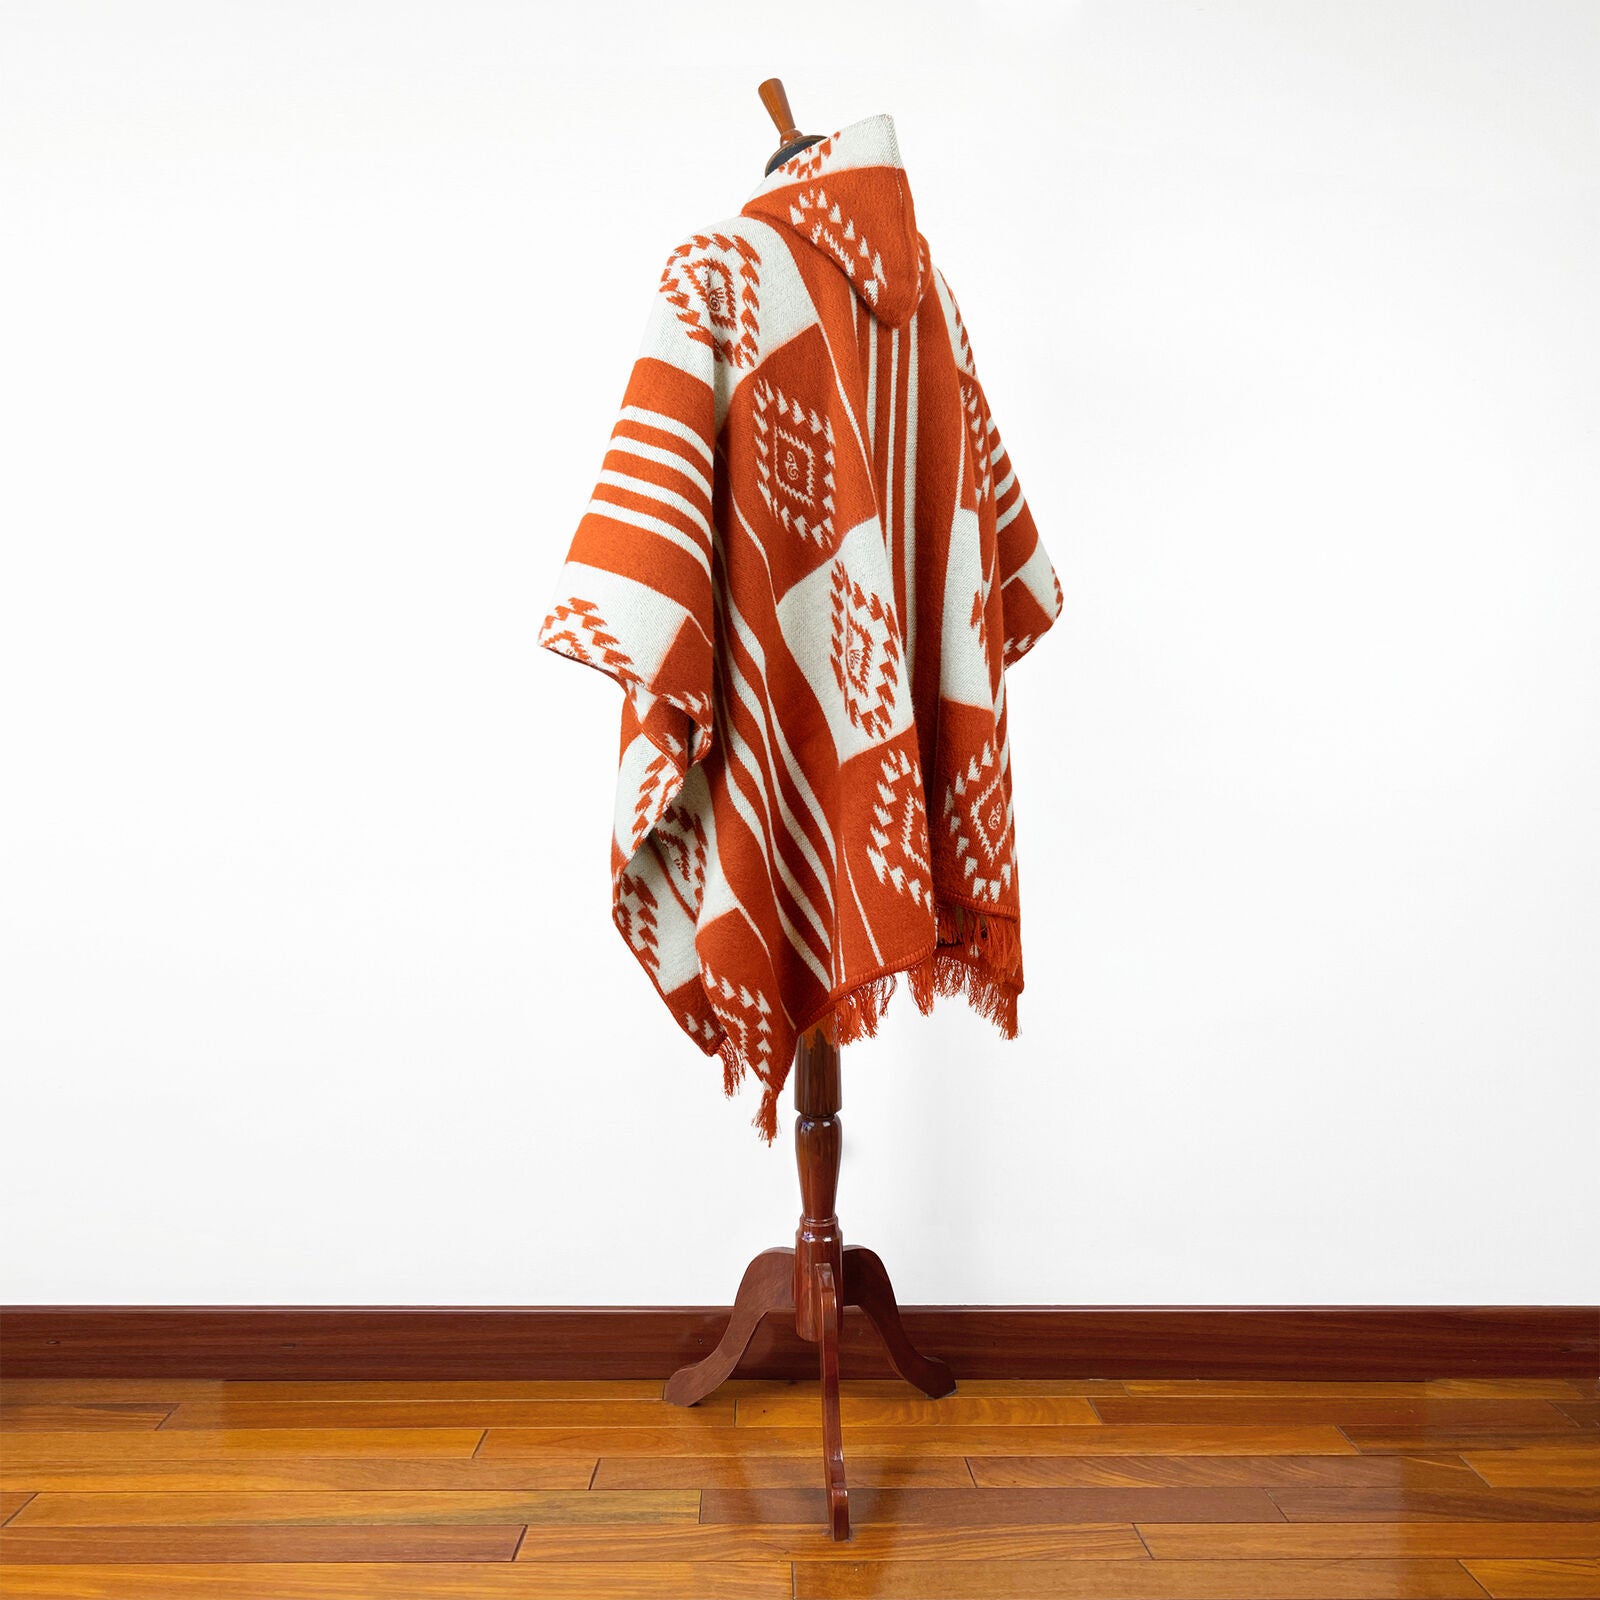 Huicundos - Baby Alpaca wool Unisex Hooded Poncho Pullover S-XXL - brick/orange - Aztec pattern